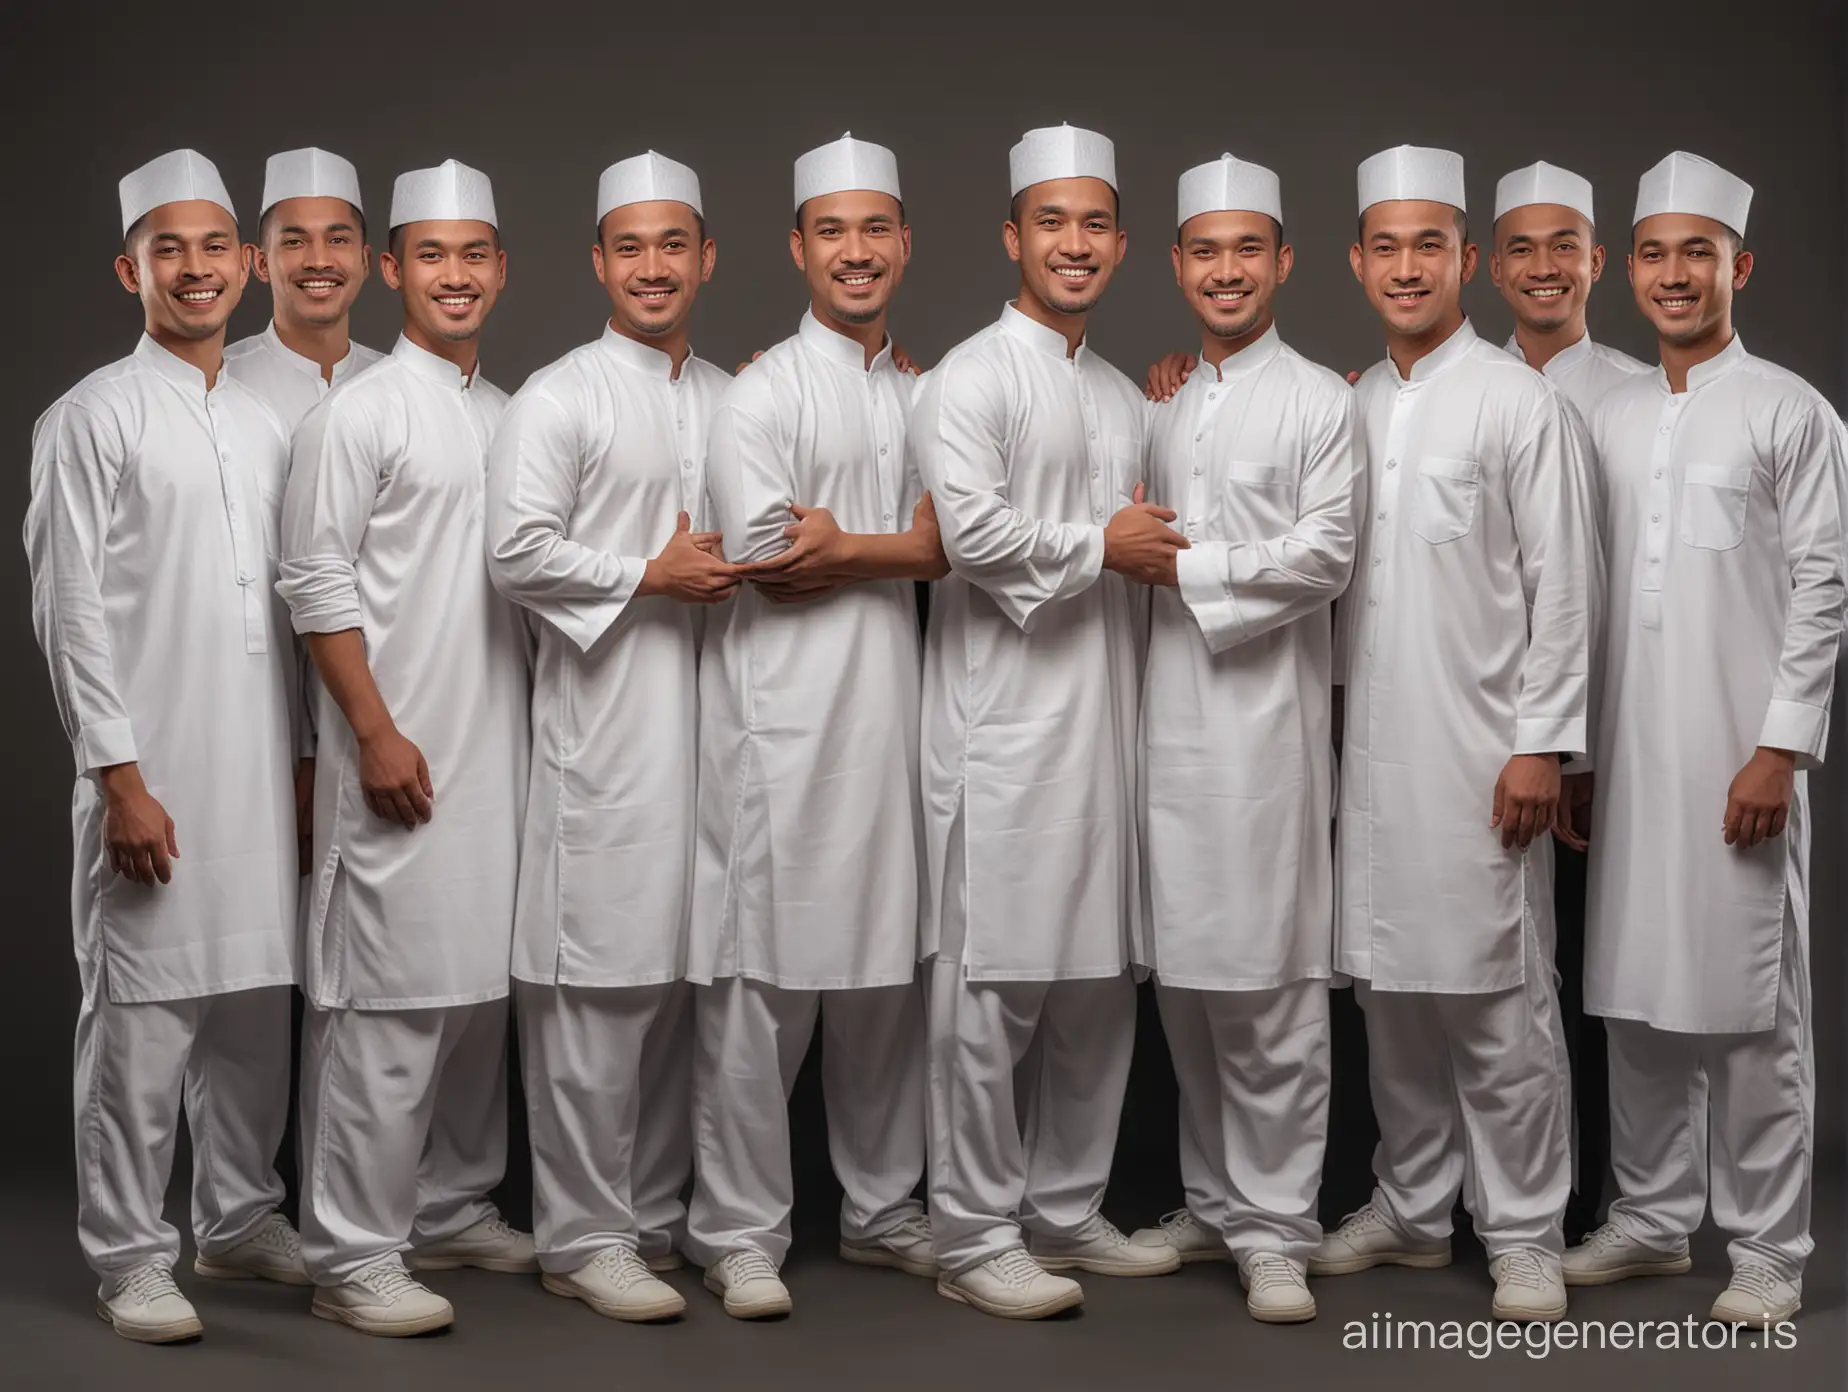 Southeast-Asian-Men-in-Traditional-White-Muslim-Attire-Posed-Happily-in-Dark-Photo-Studio-Setting